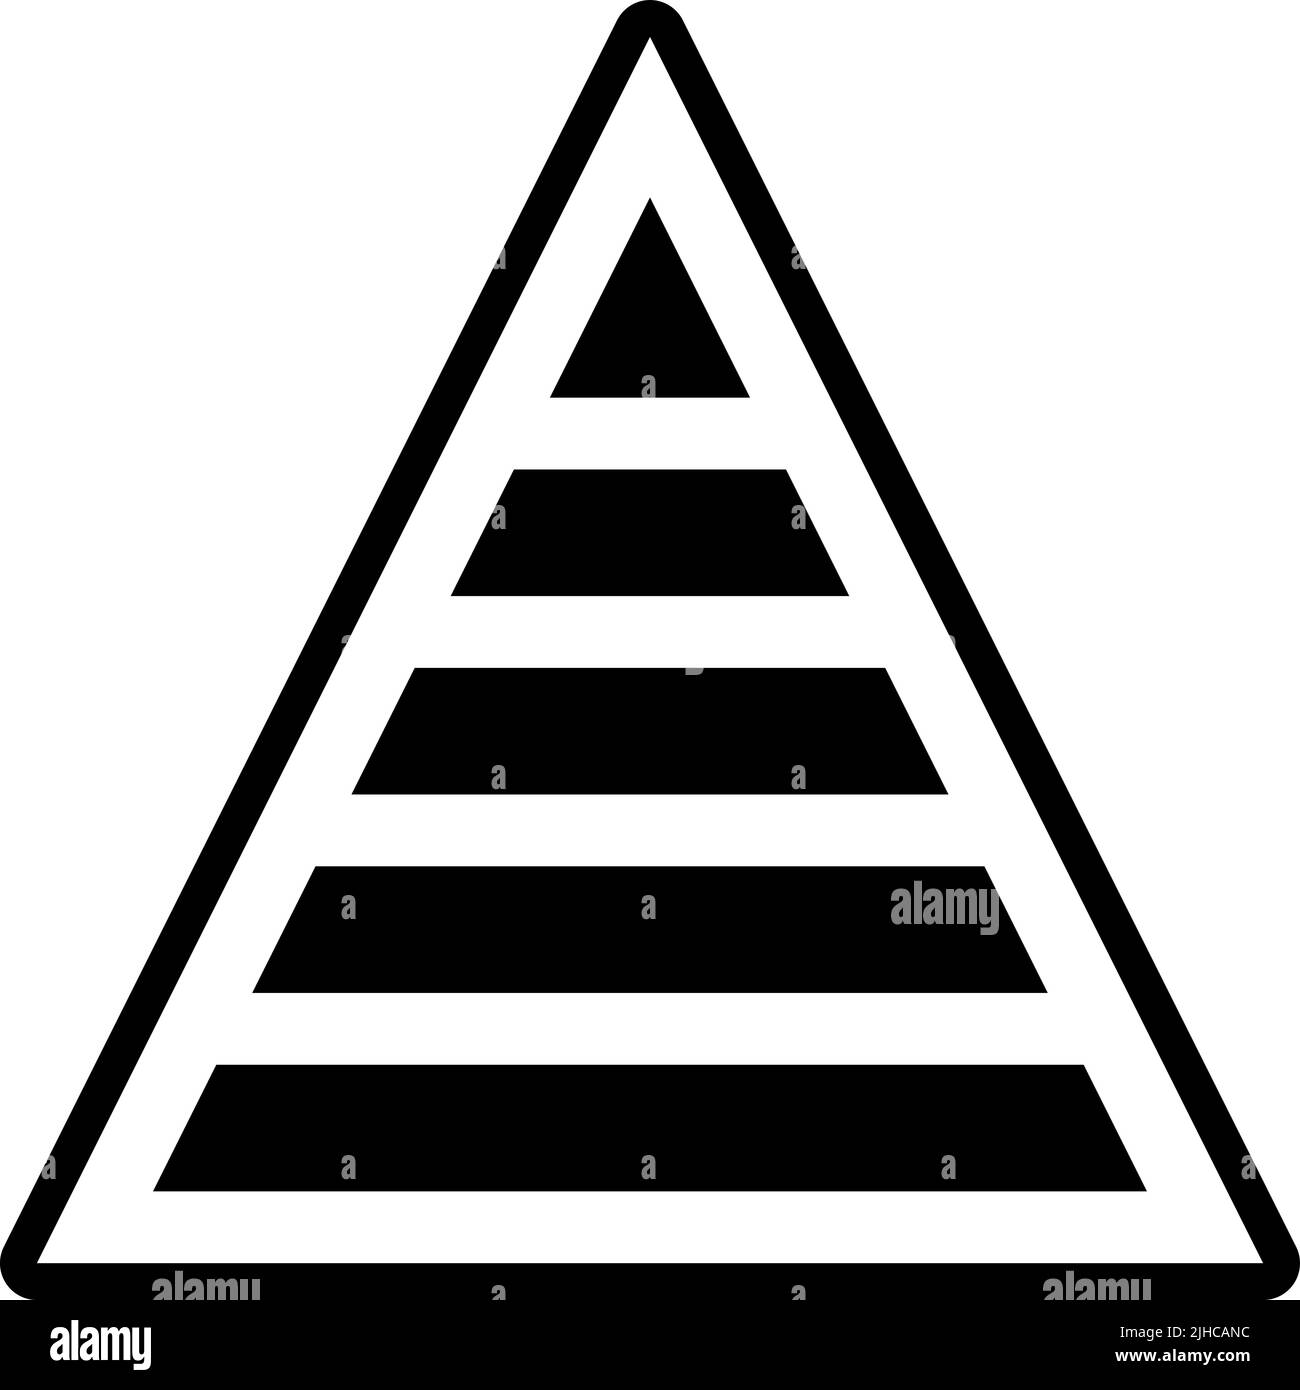 Pyramid diagram Black and White Stock Photos & Images - Alamy